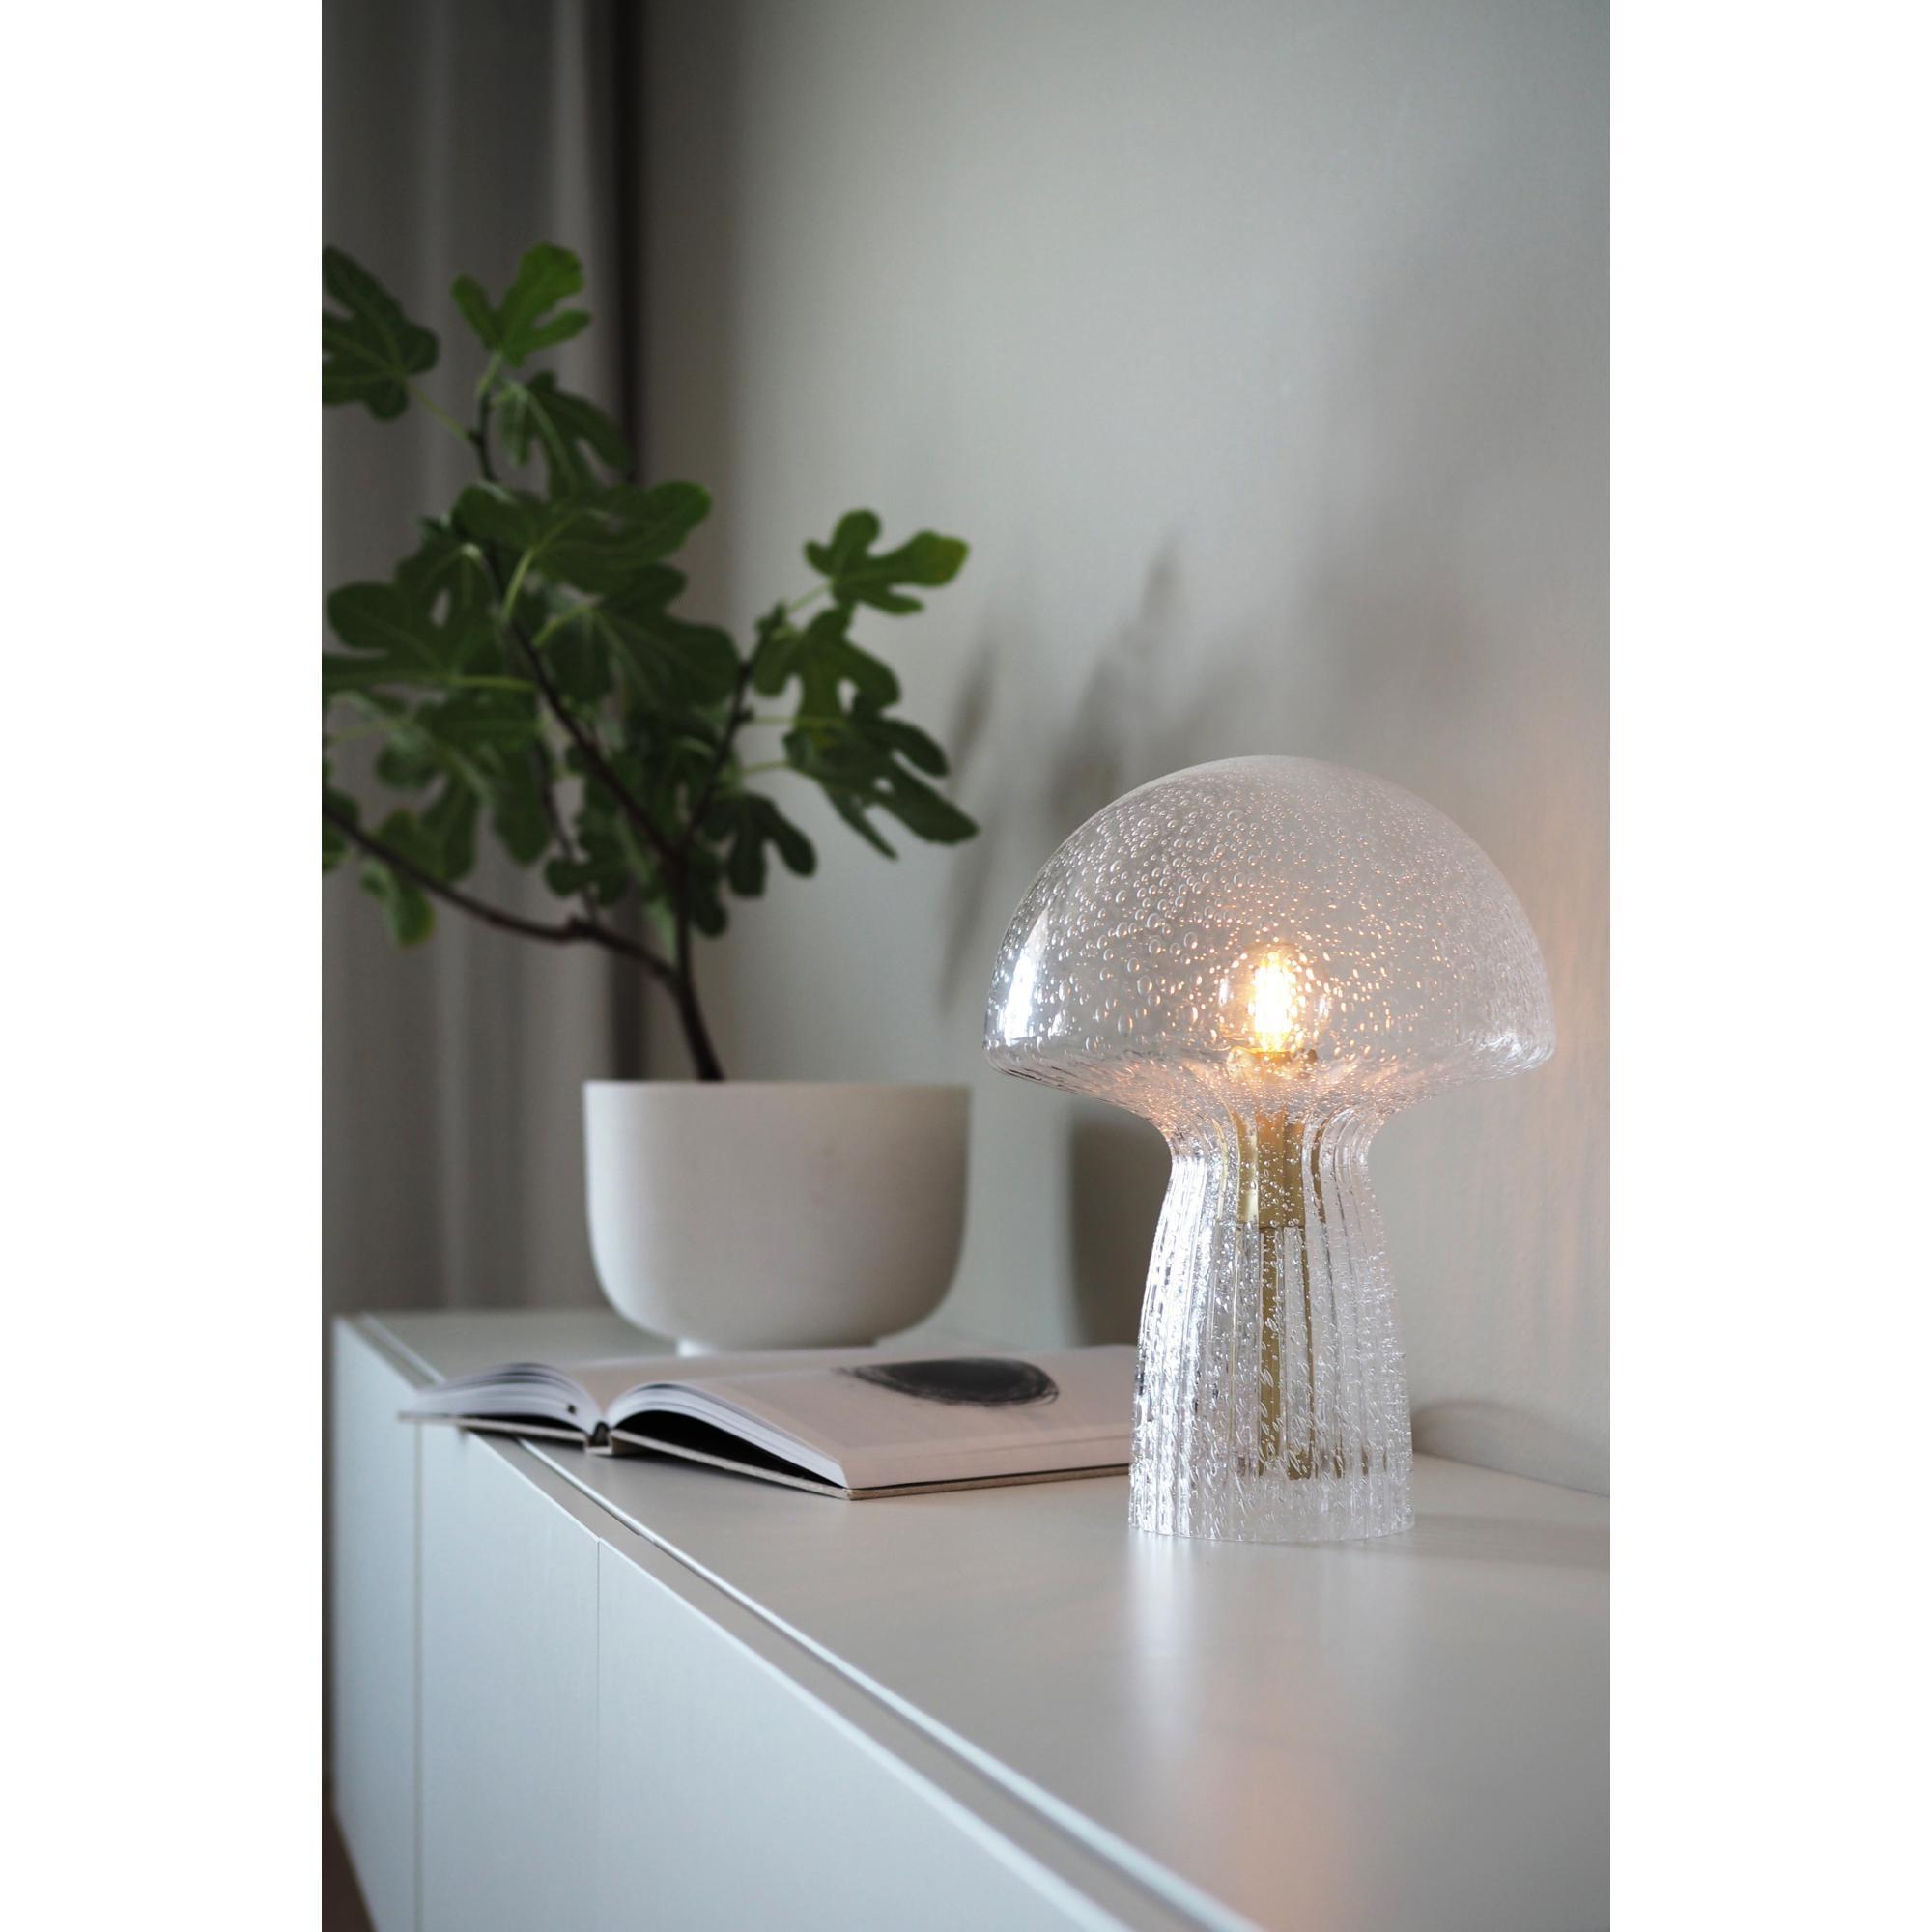 Zending Mok gelei Globen Lighting Fungo 22 Table Lamp Special Edition Clear